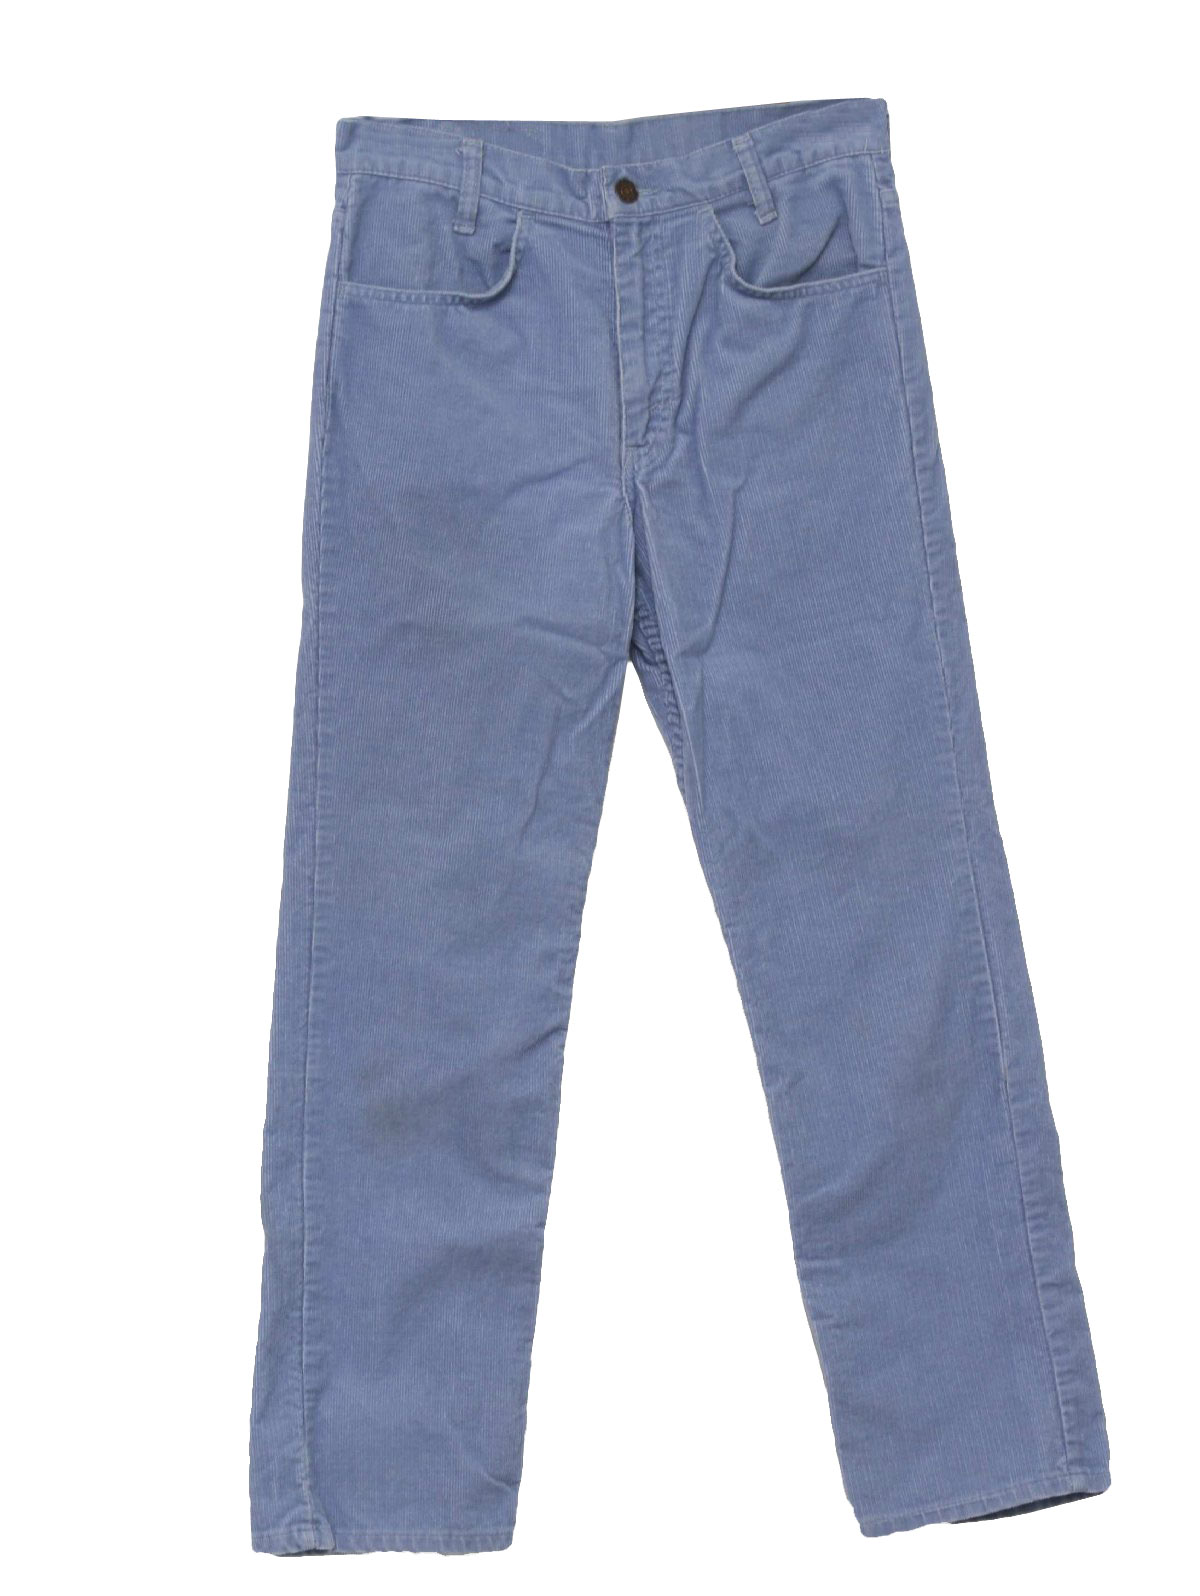 light blue corduroy pants - Pi Pants